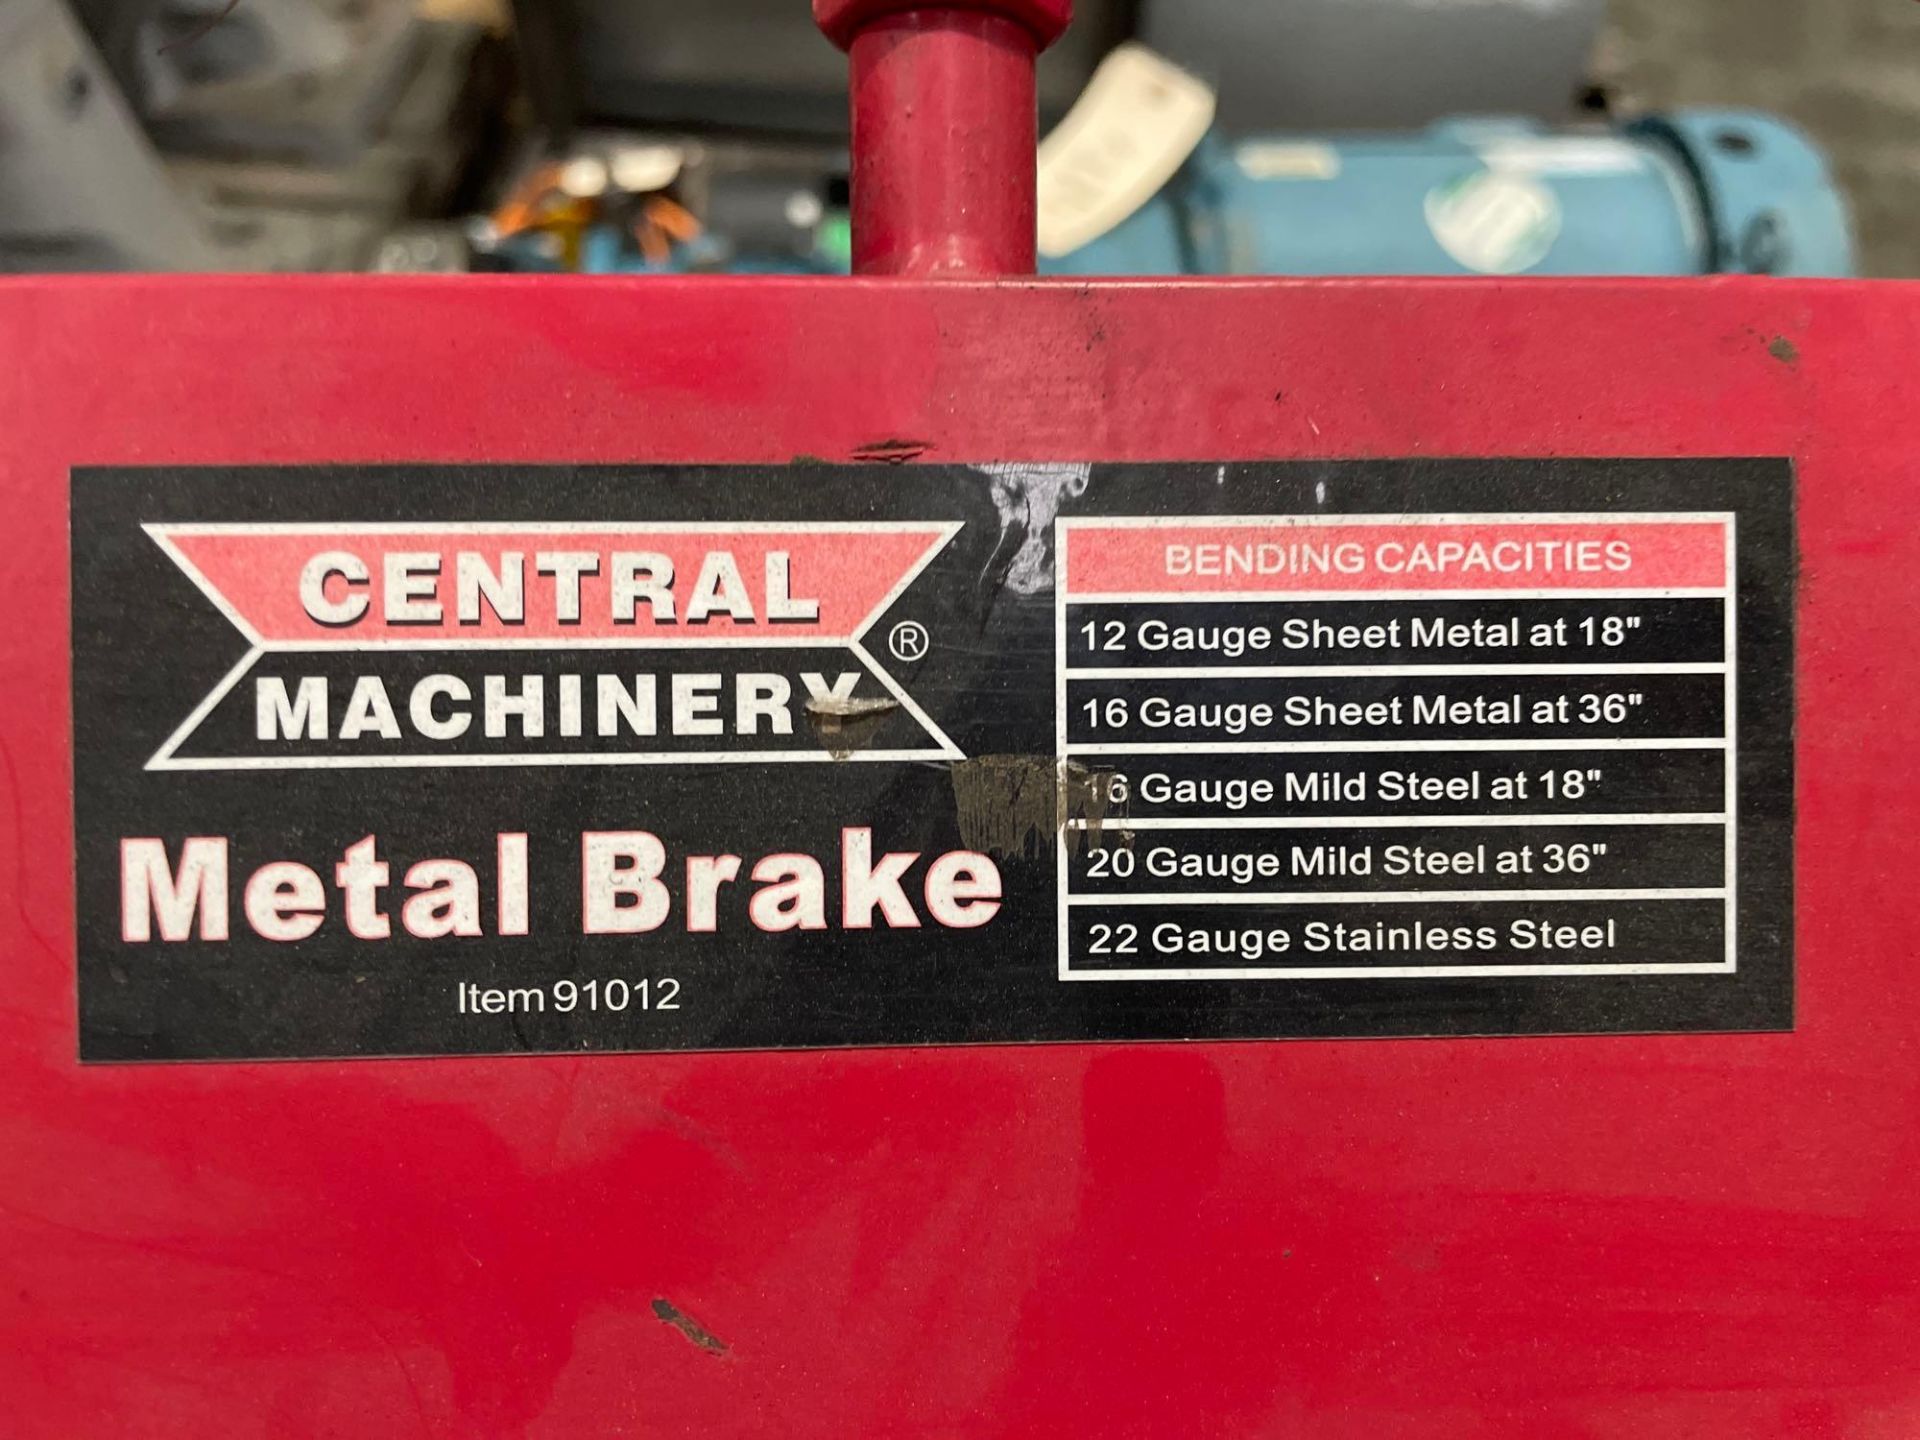 36” Central Machinery Metal Brake Model 91042 - Image 4 of 5